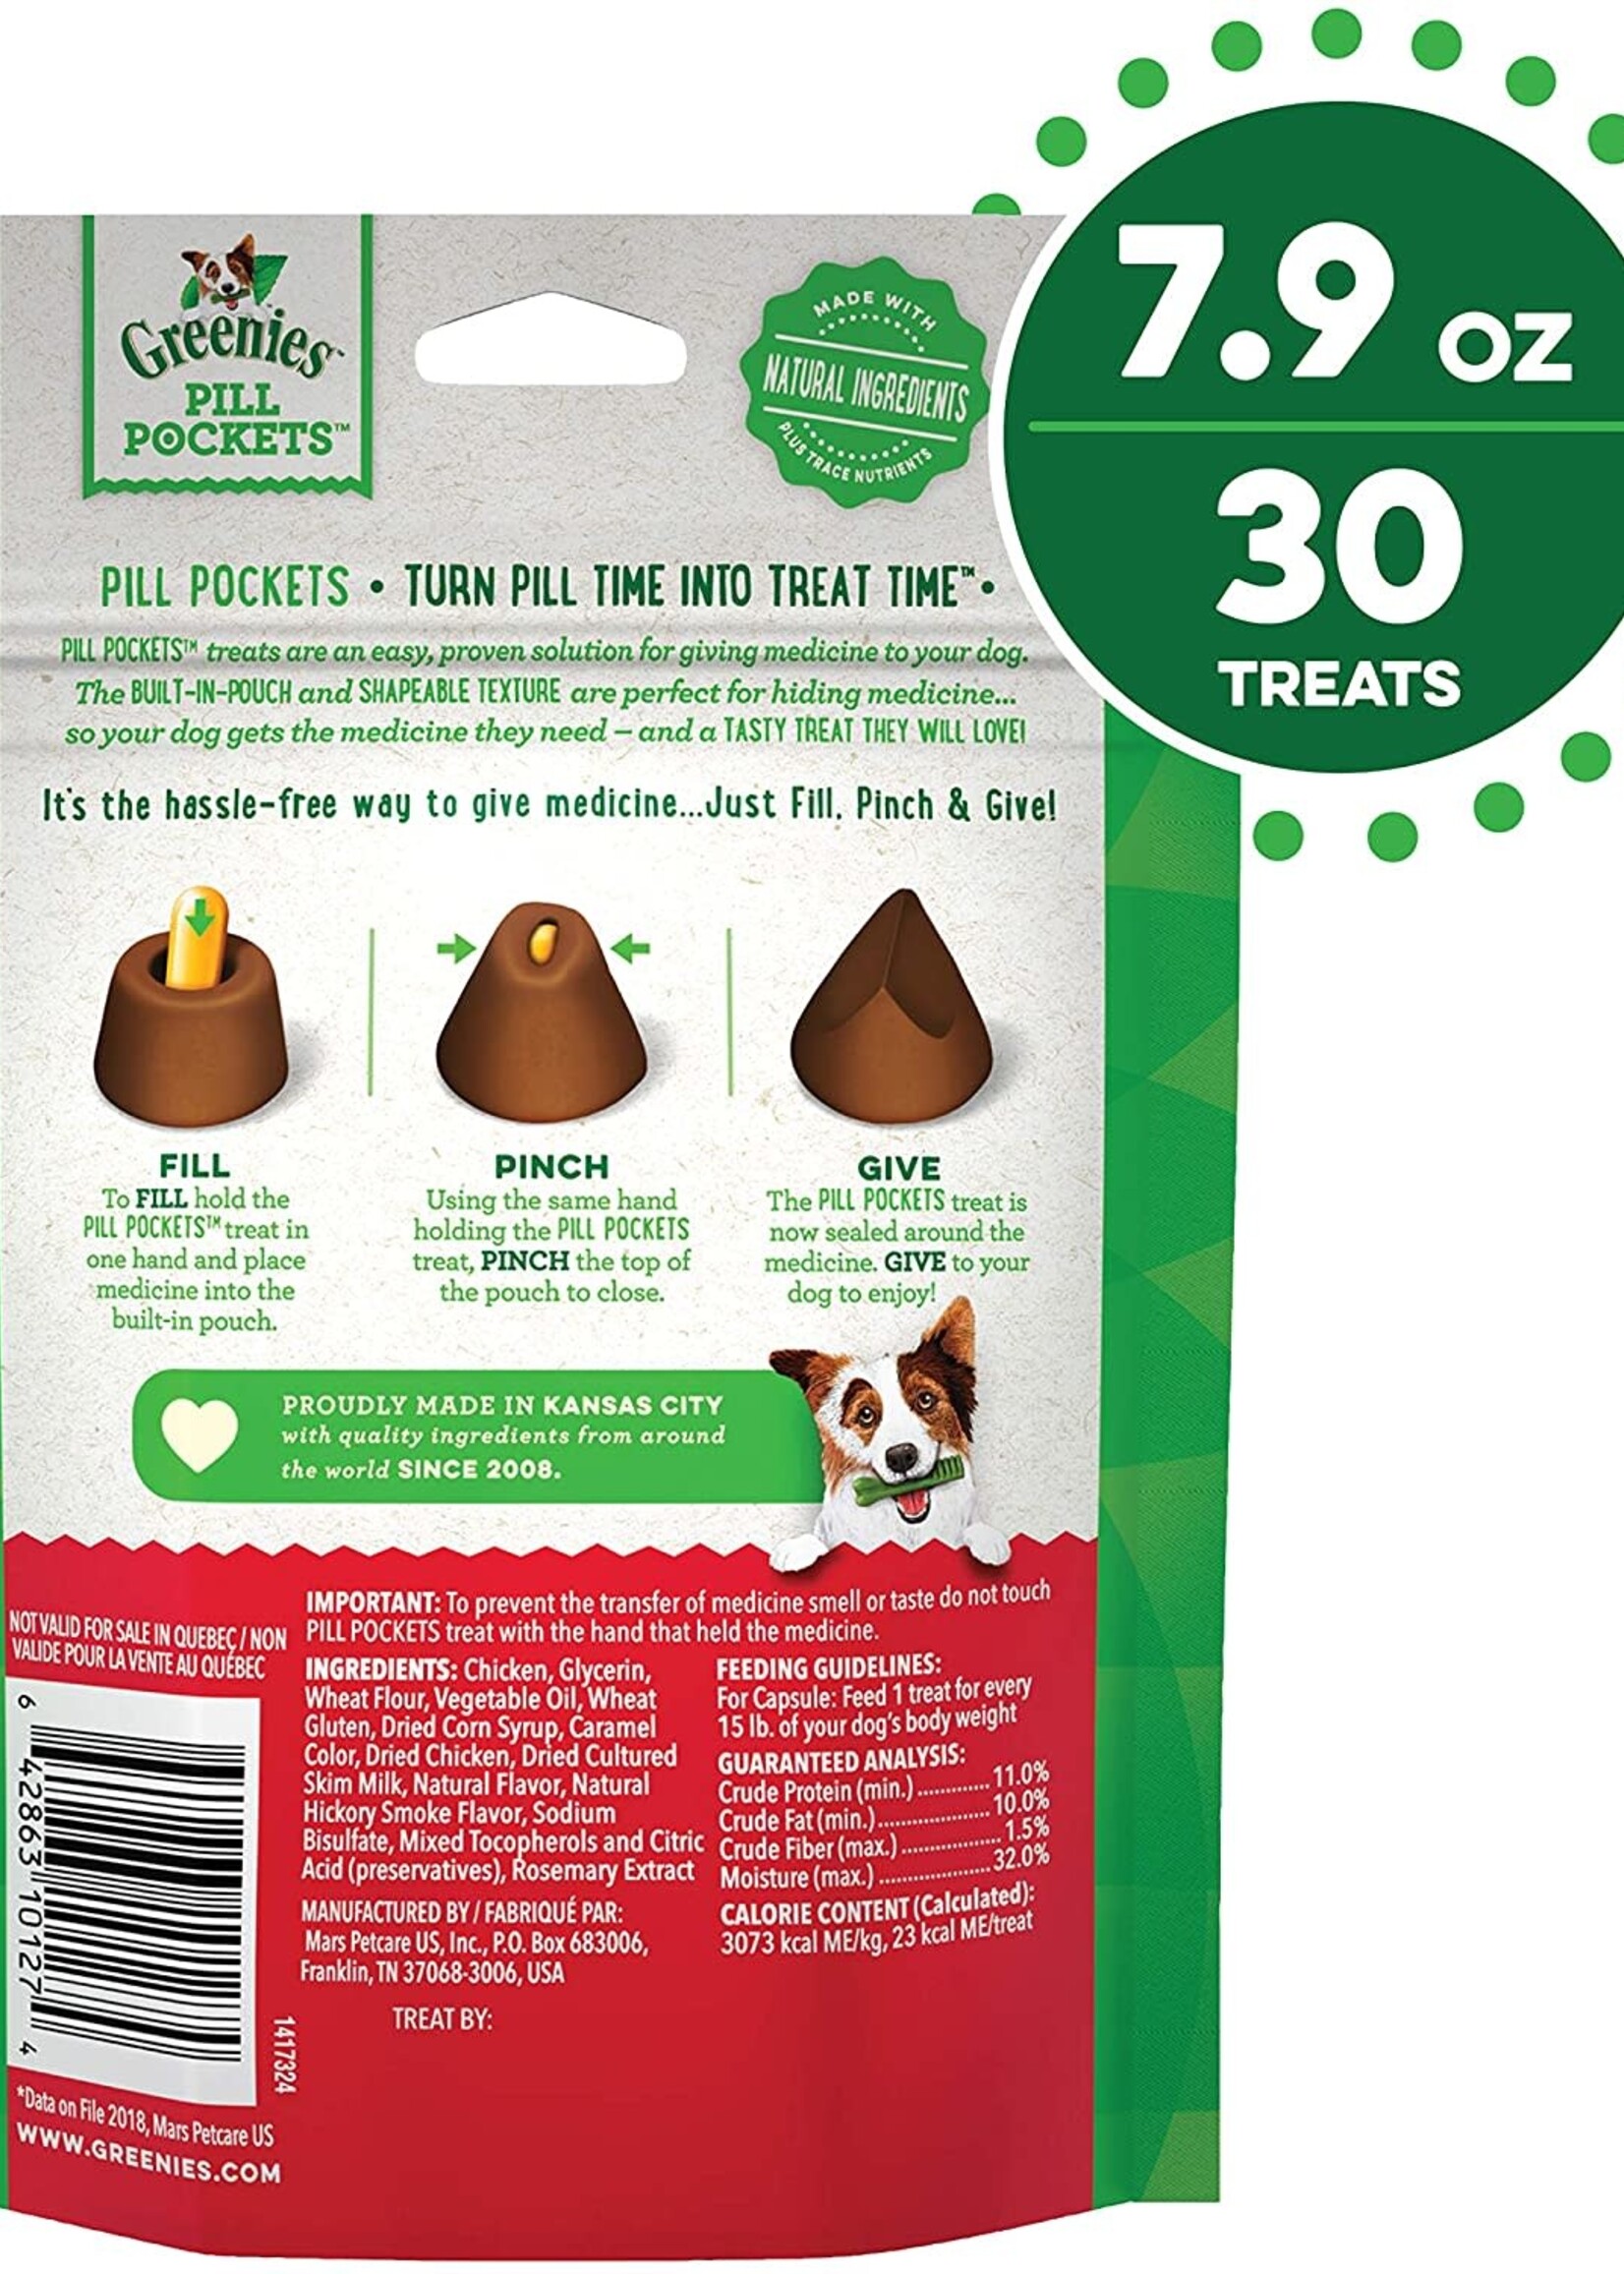 GREENIES GREENIES Pill Pockets Capsule Size Hickory Smoke Flavor Dog Treats 7.9-oz